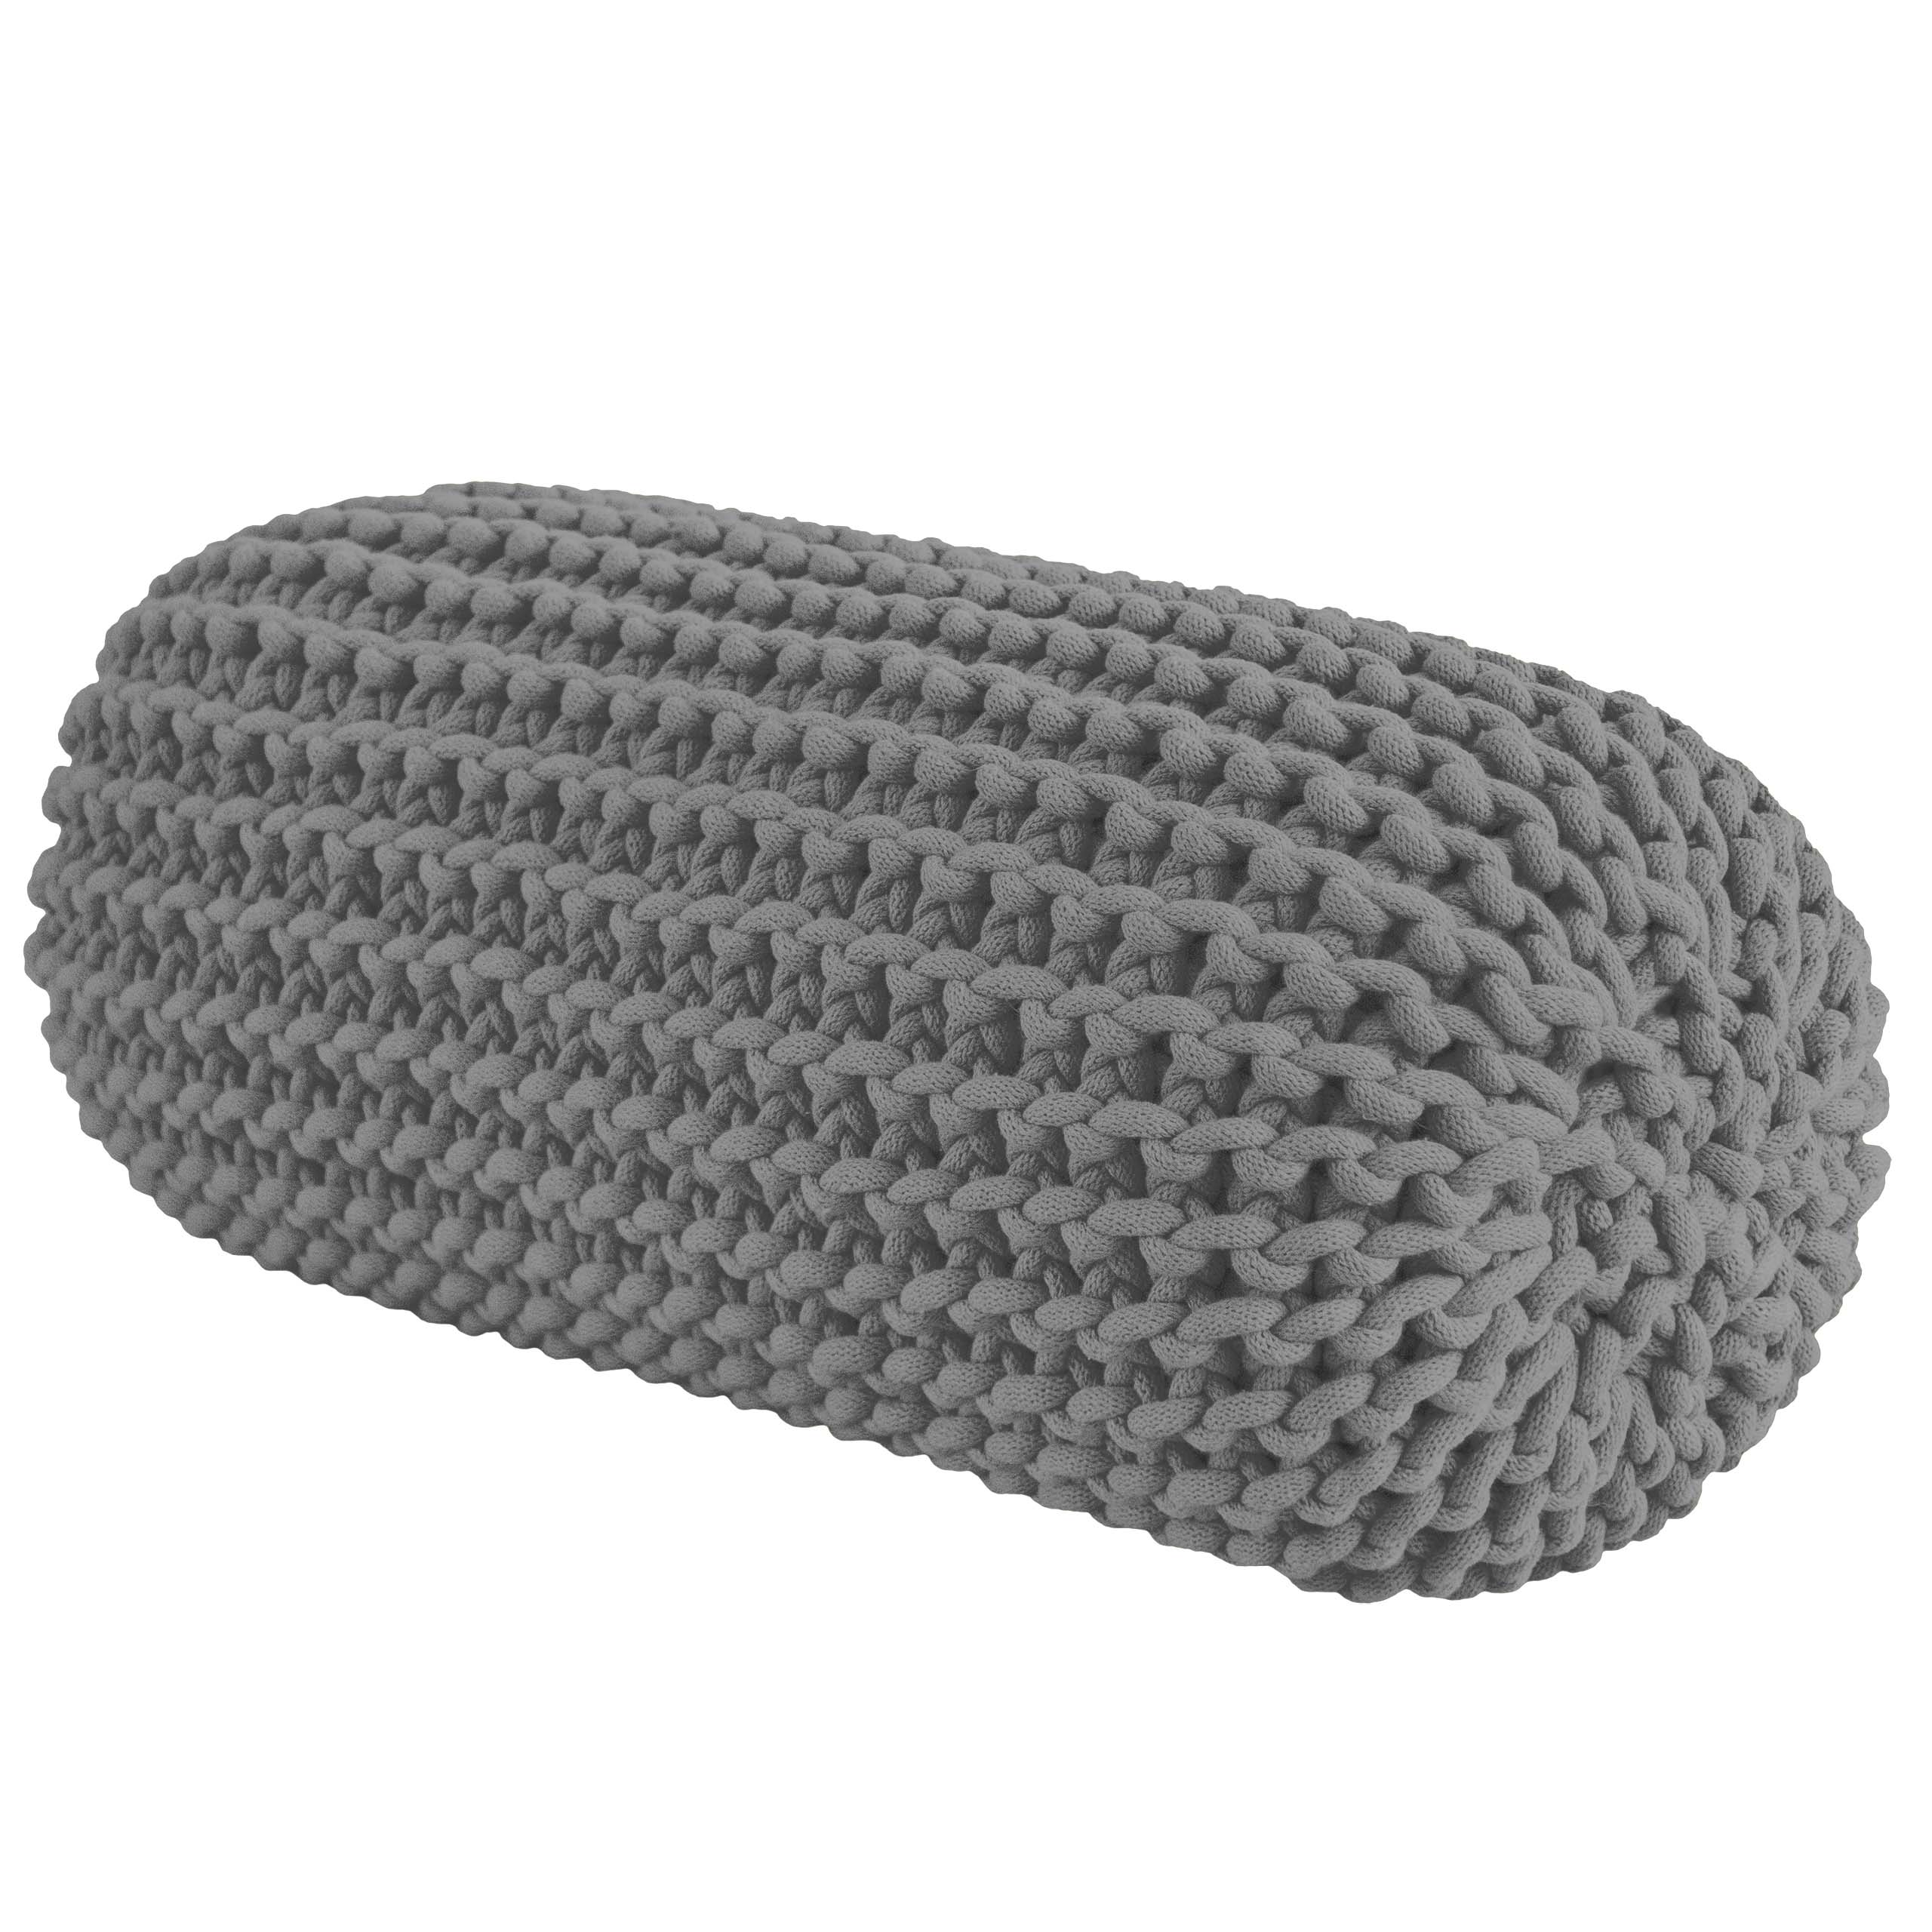 Chunky knitted bolster footrest | DARK GREY